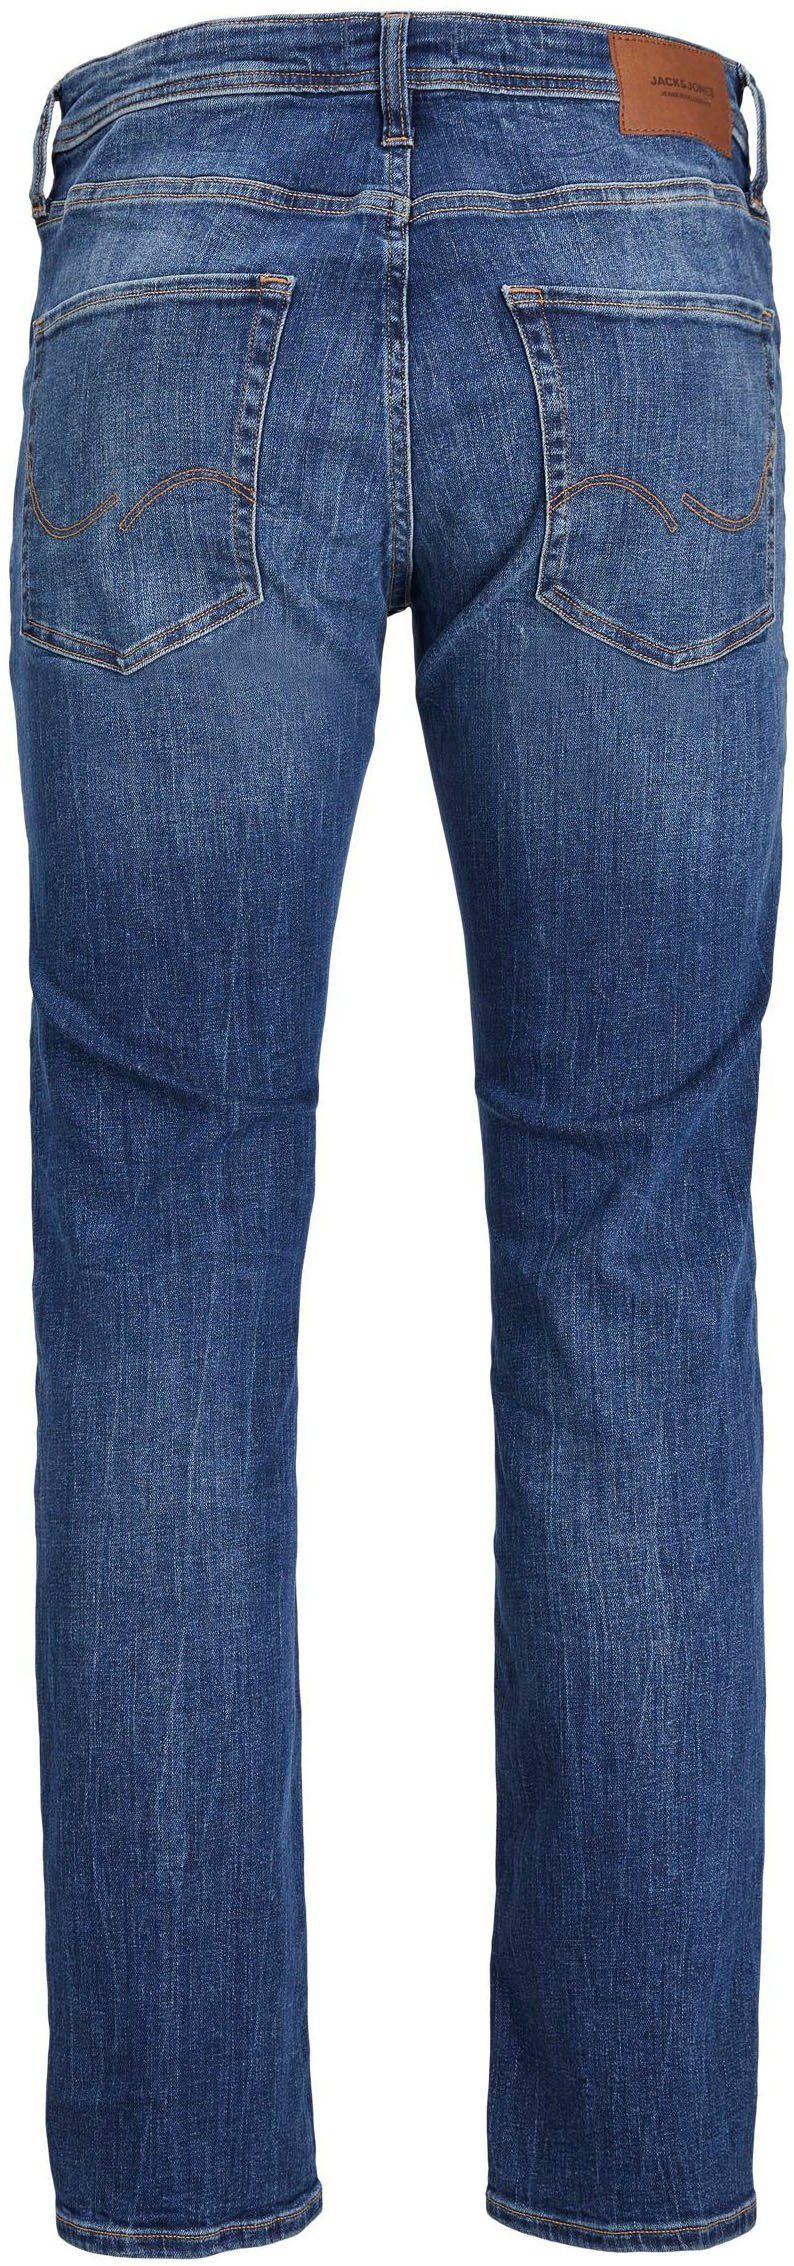 Jack & Jones Comfort-fit-Jeans 355 AM Blue JJORIGINAL Denim JJIMIKE